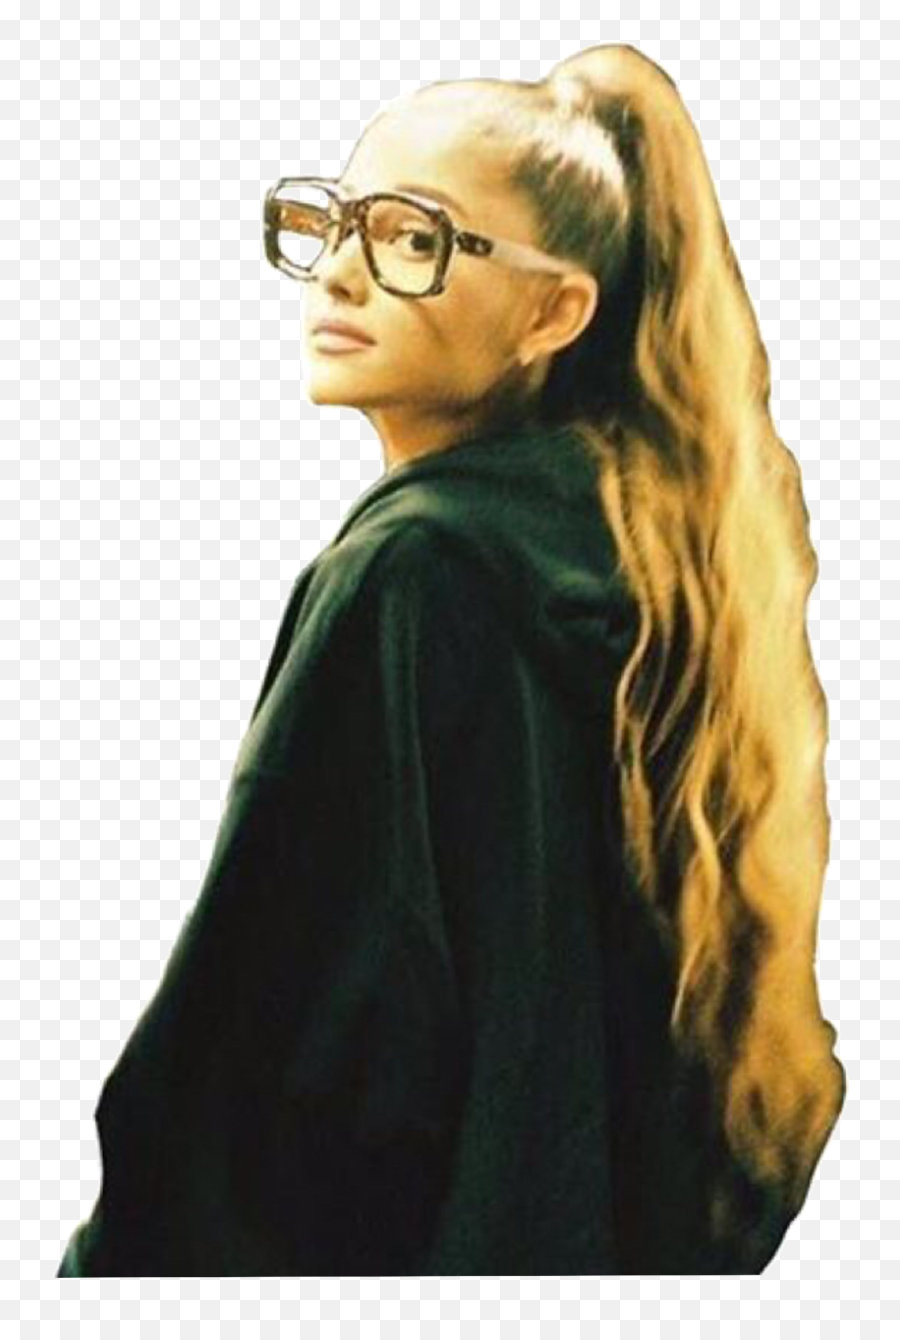 Ariana Grande Brown Ponytail Cute Nerd Glasses - Ariana Grande Transparent 2019 Png,Ariana Grande Transparent Background